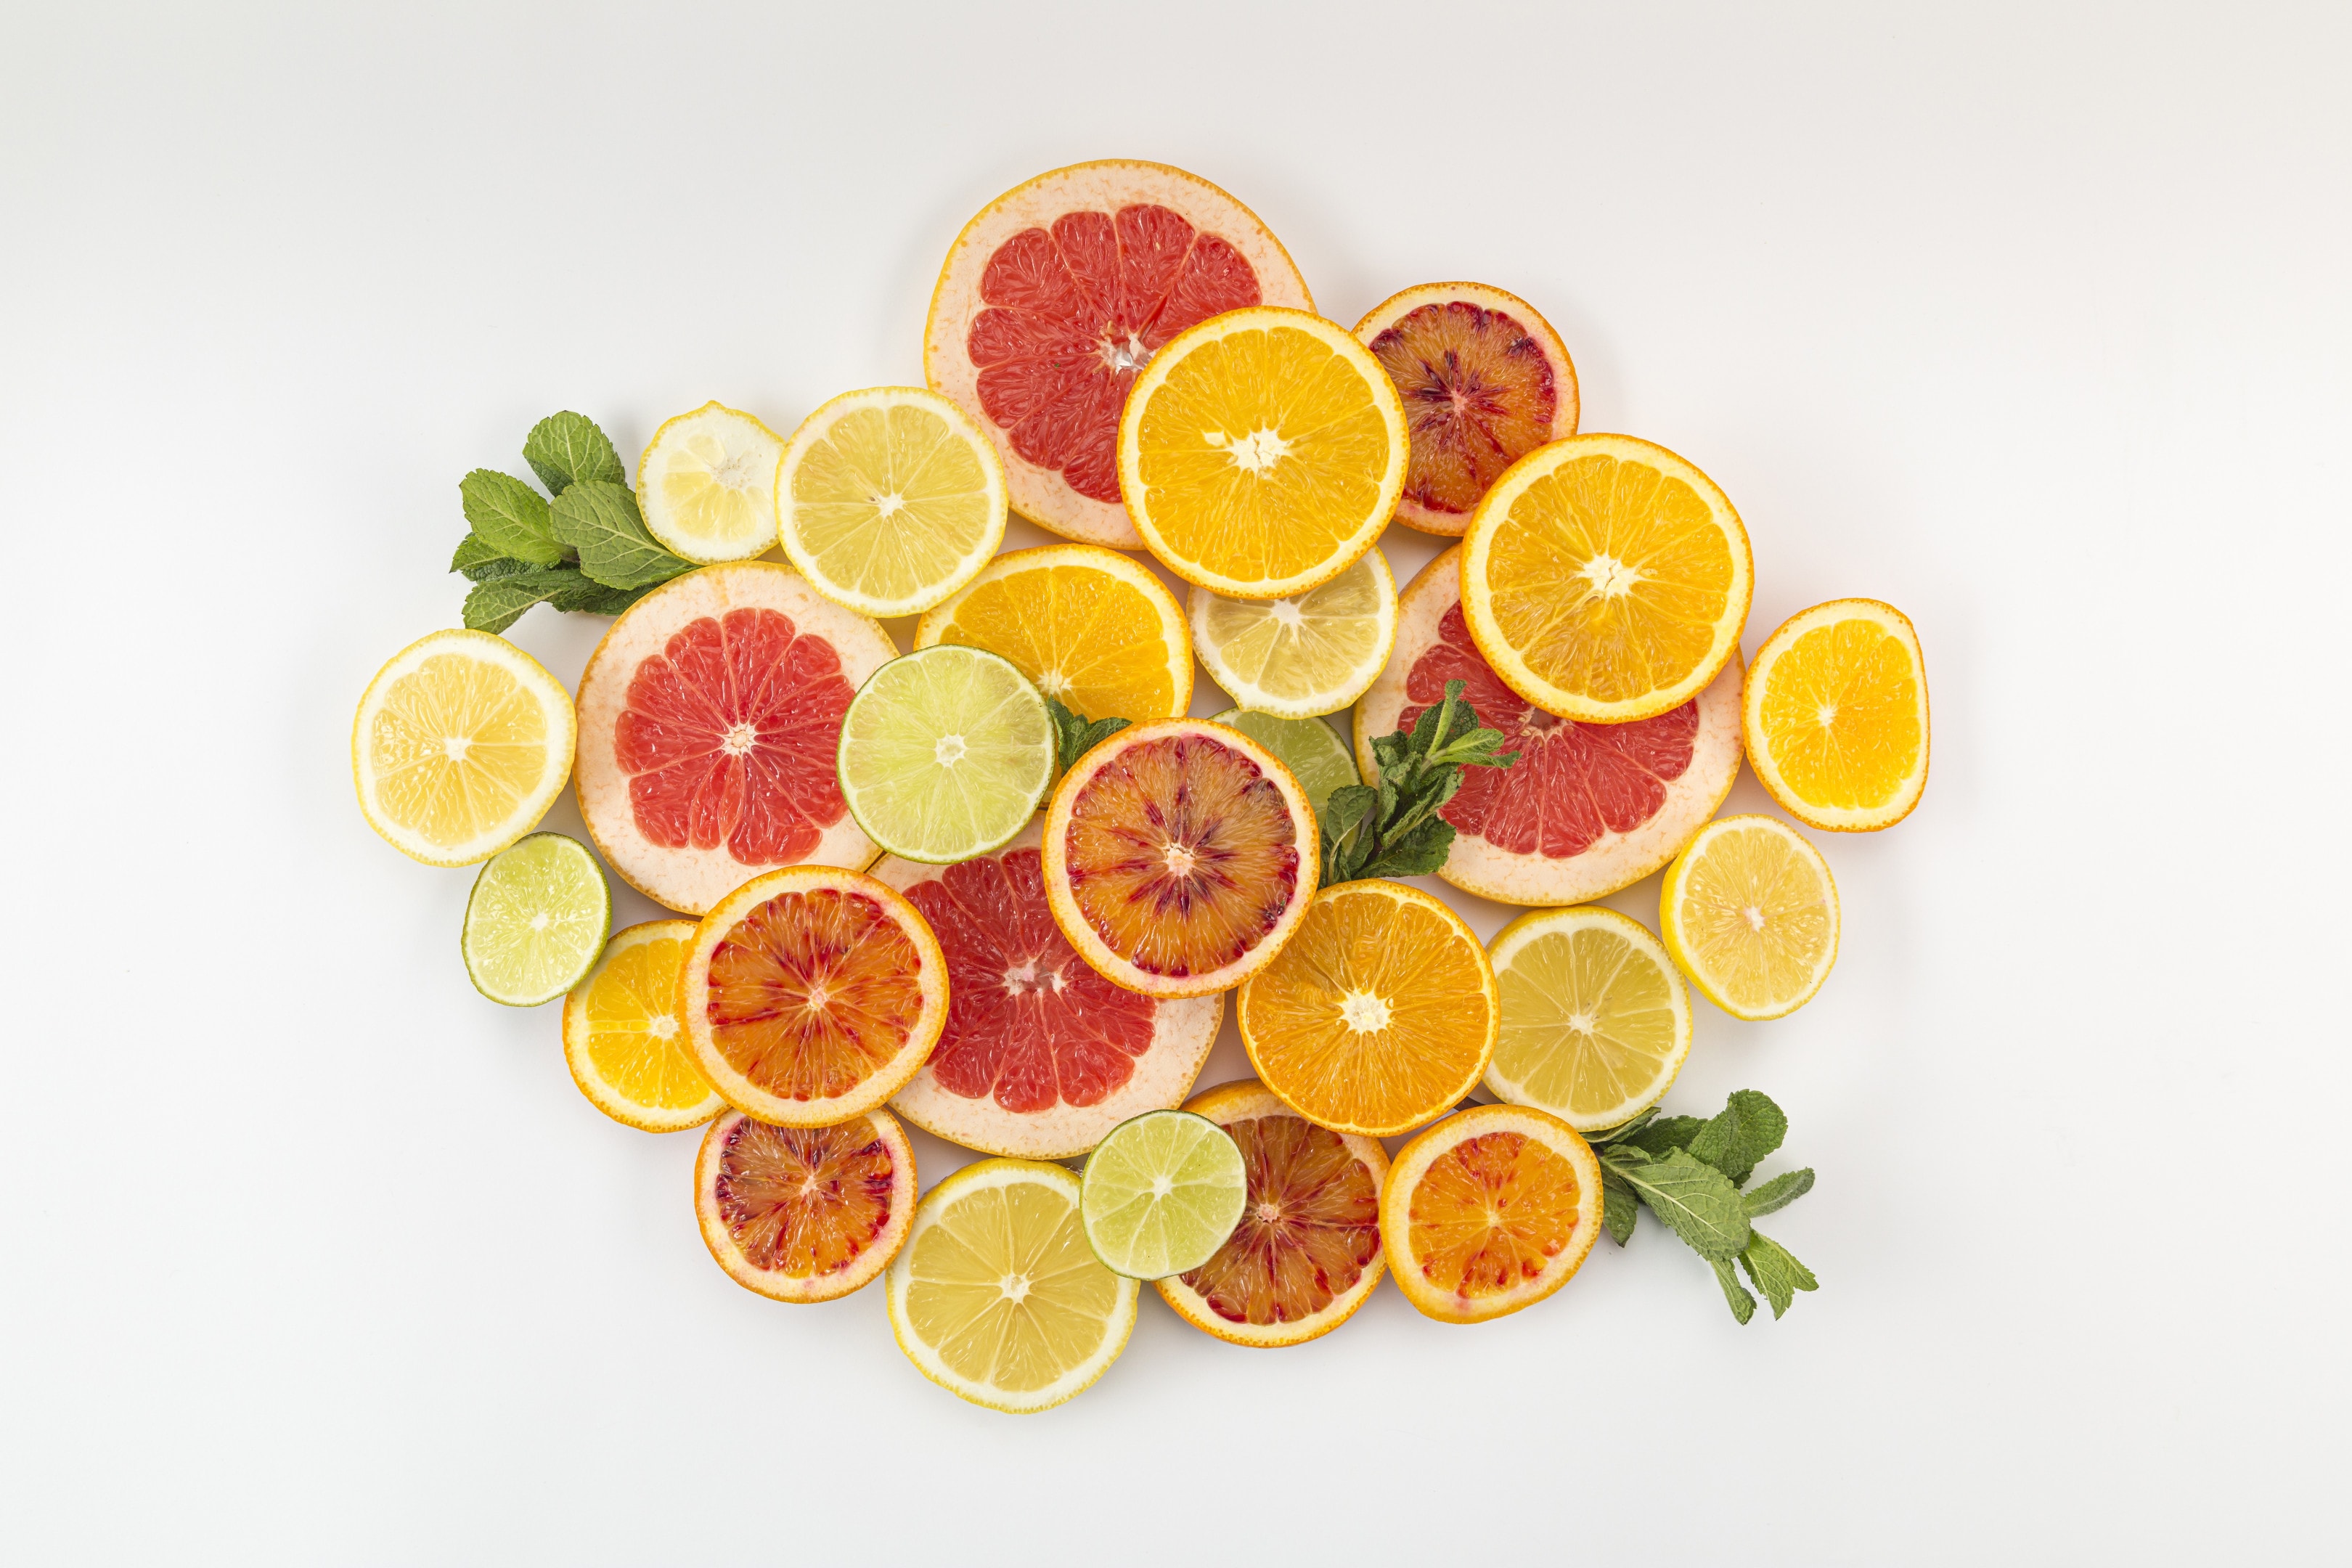 Slices citrus fruit pile of oranges lemons and grapefruits on white background